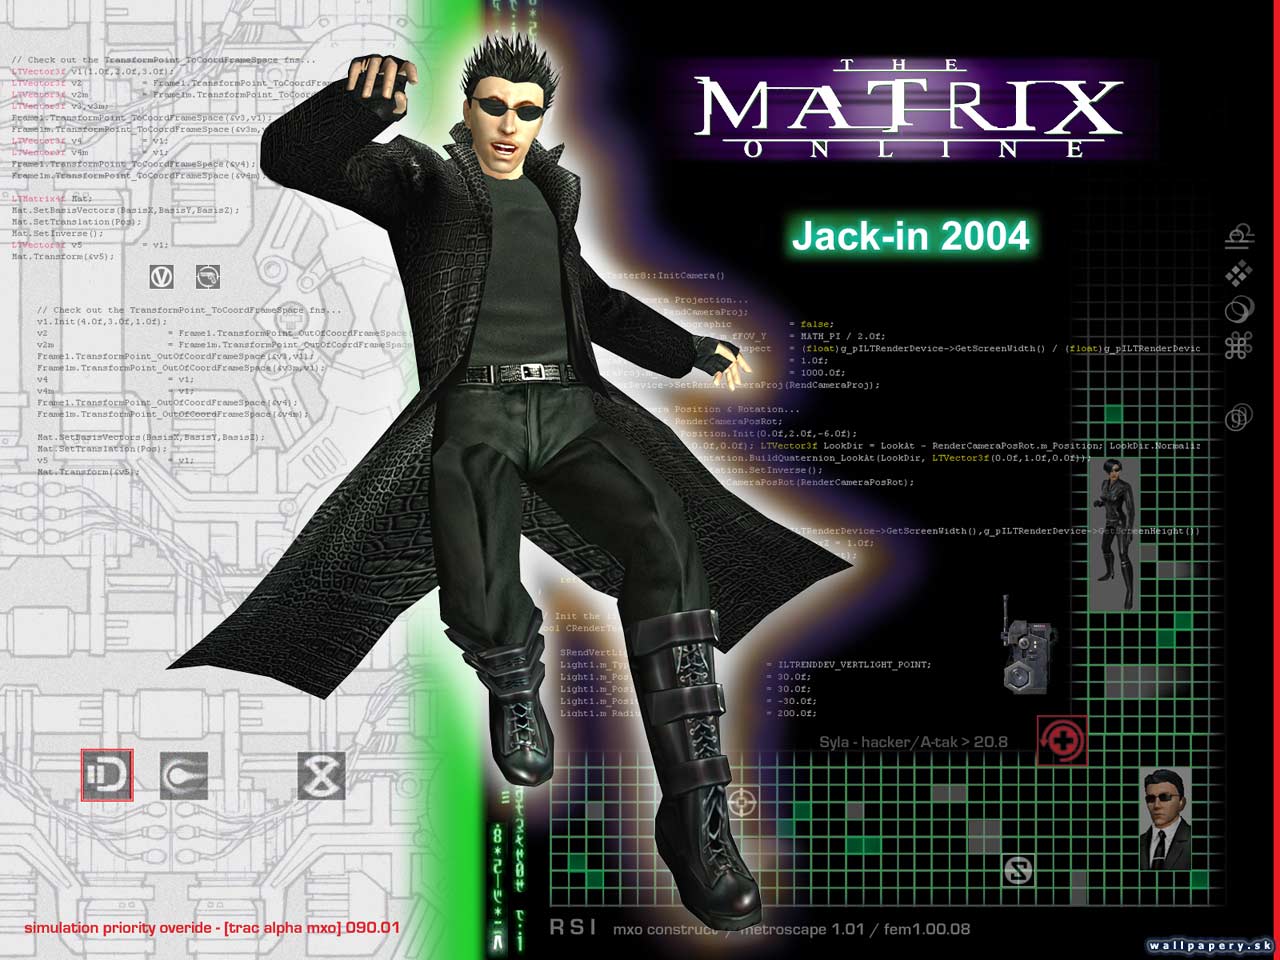 The Matrix Online - wallpaper 8